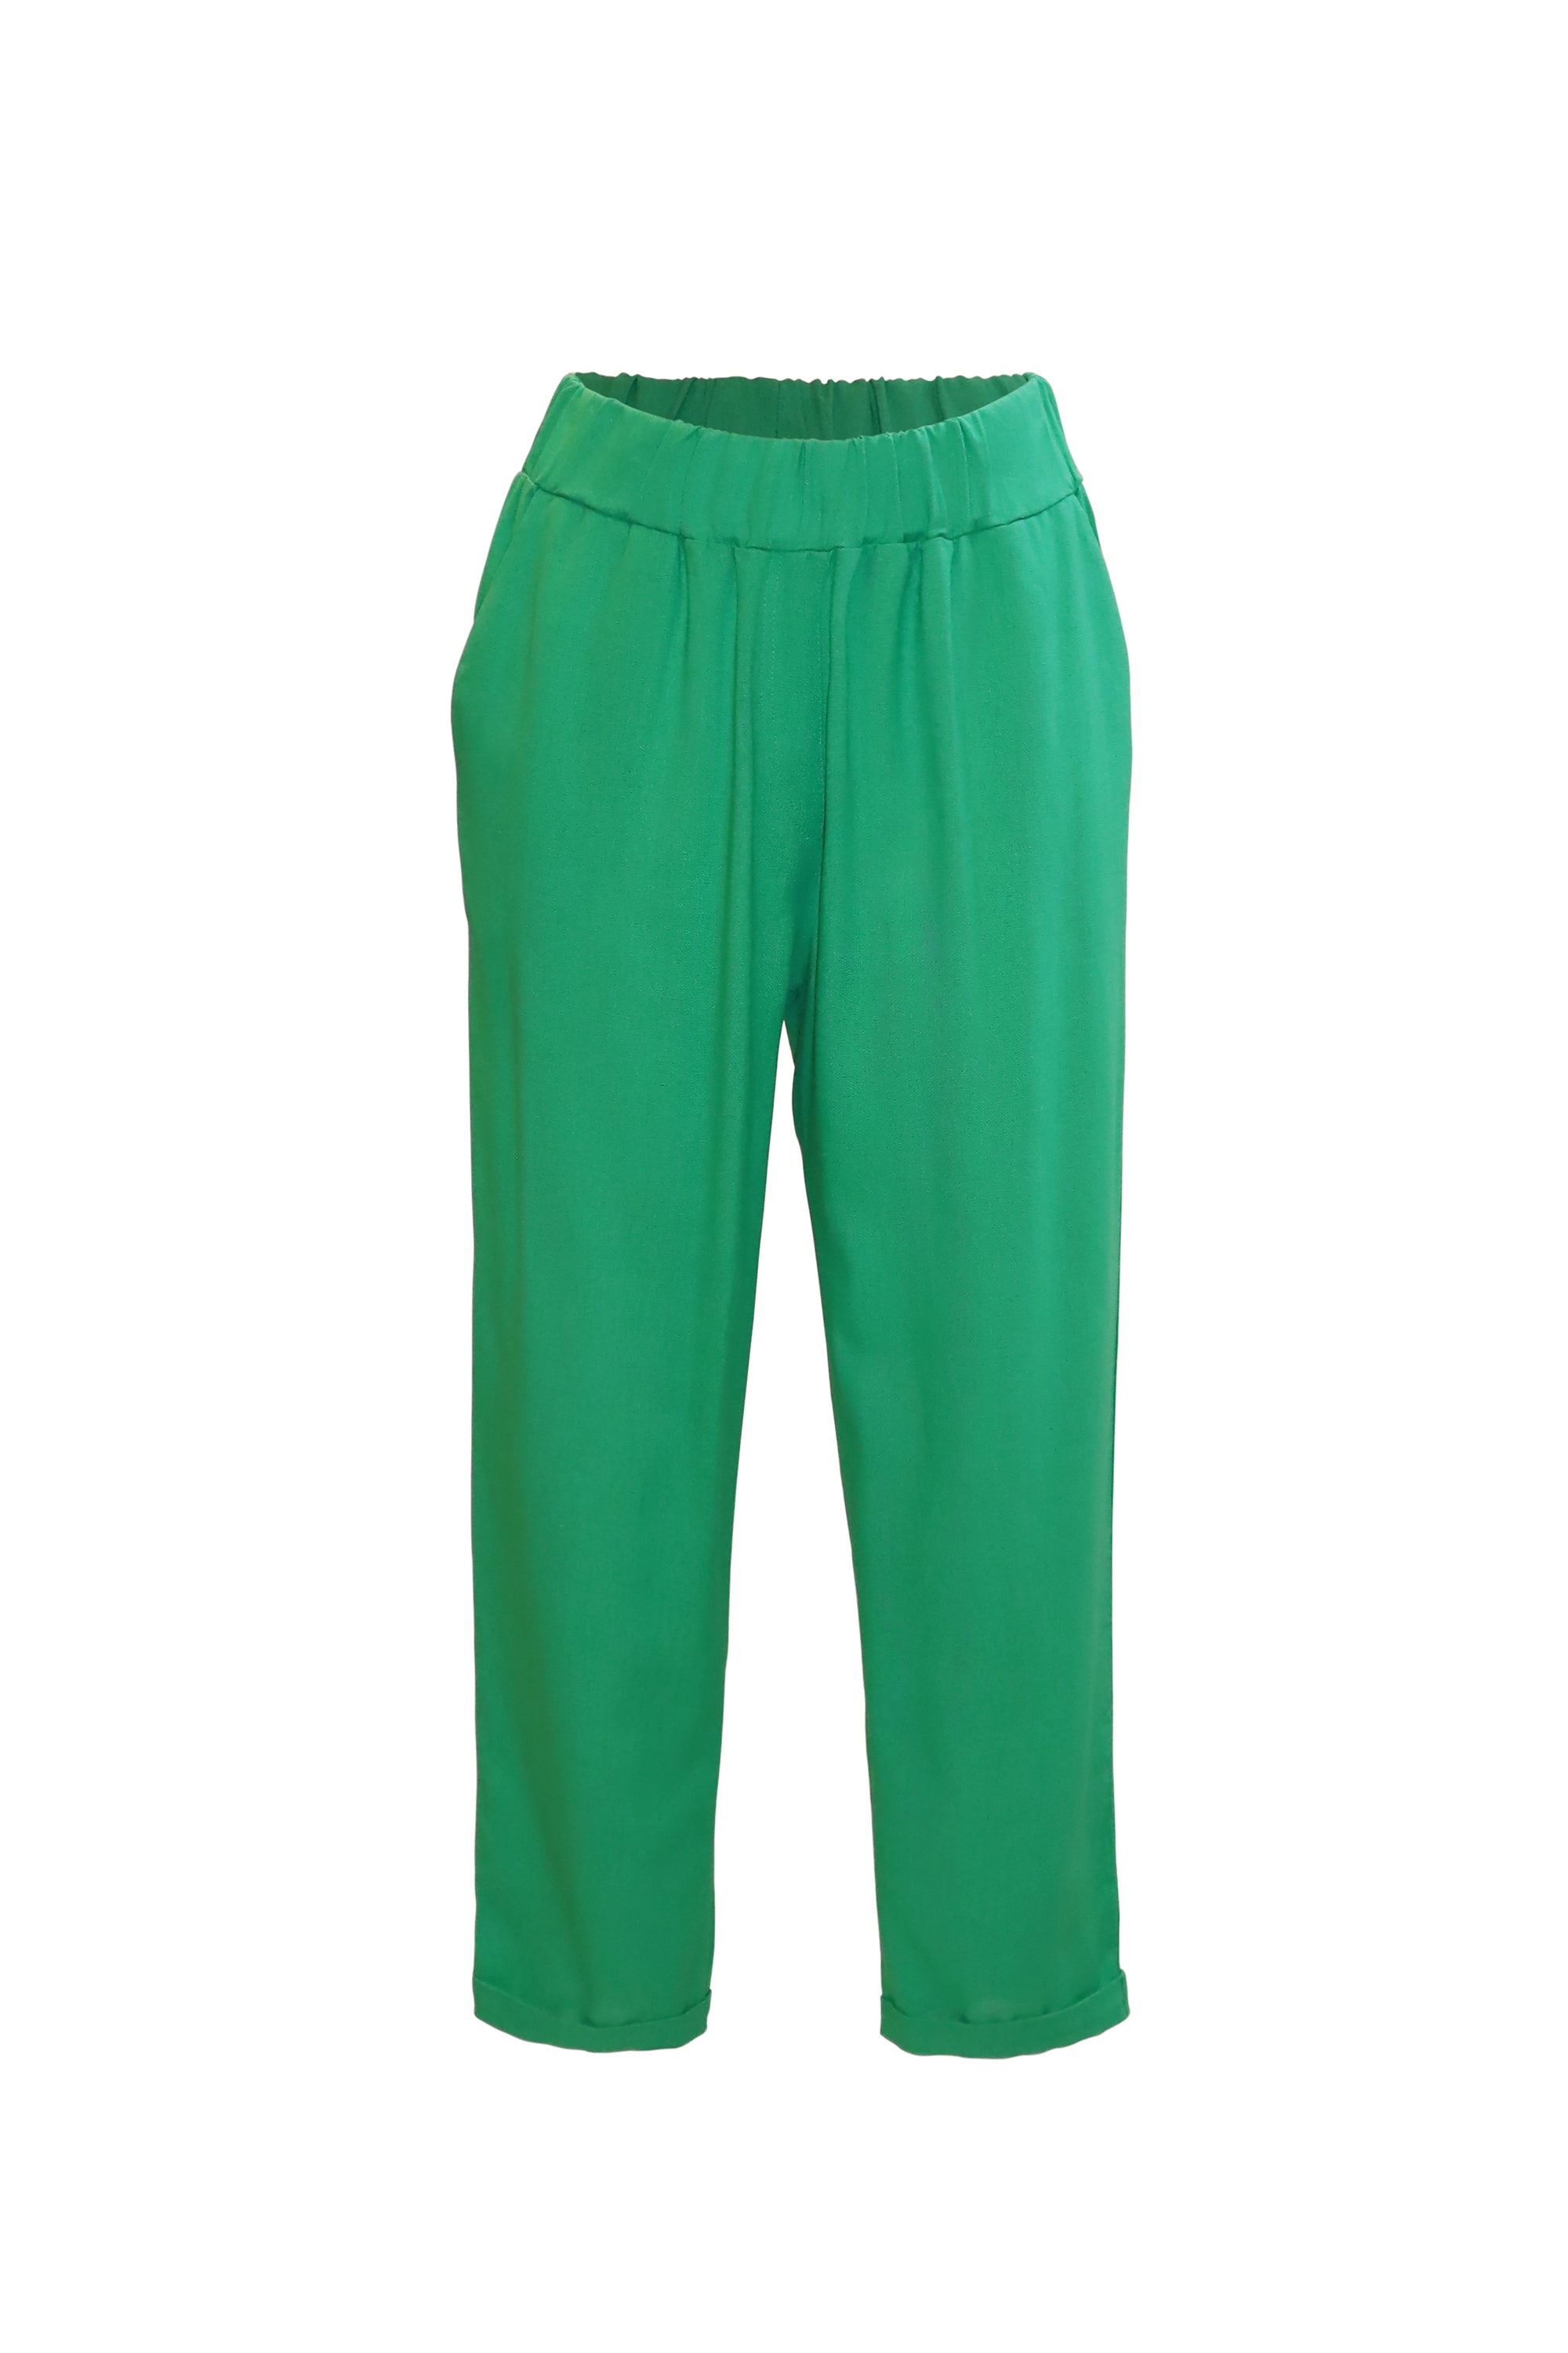 Women's Green Pants